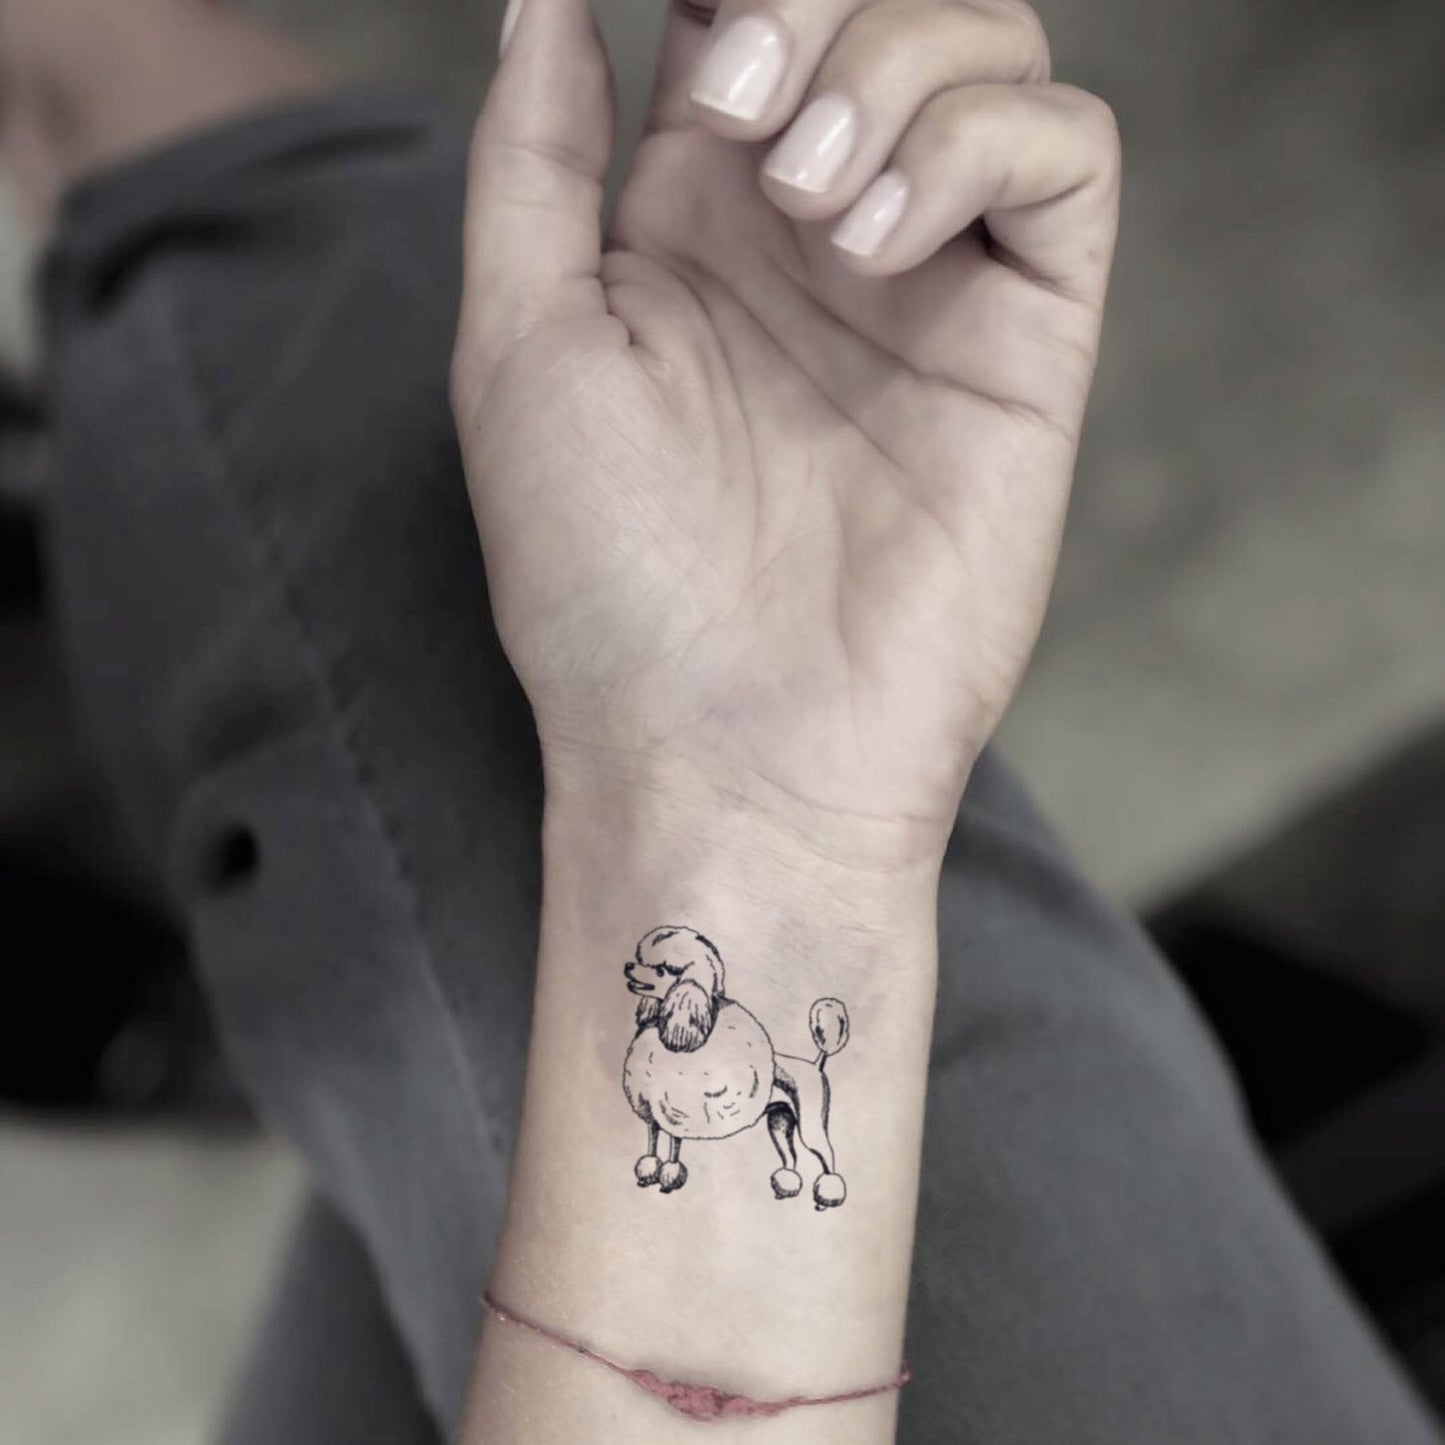 fake small poodle animal temporary tattoo sticker design idea on wrist